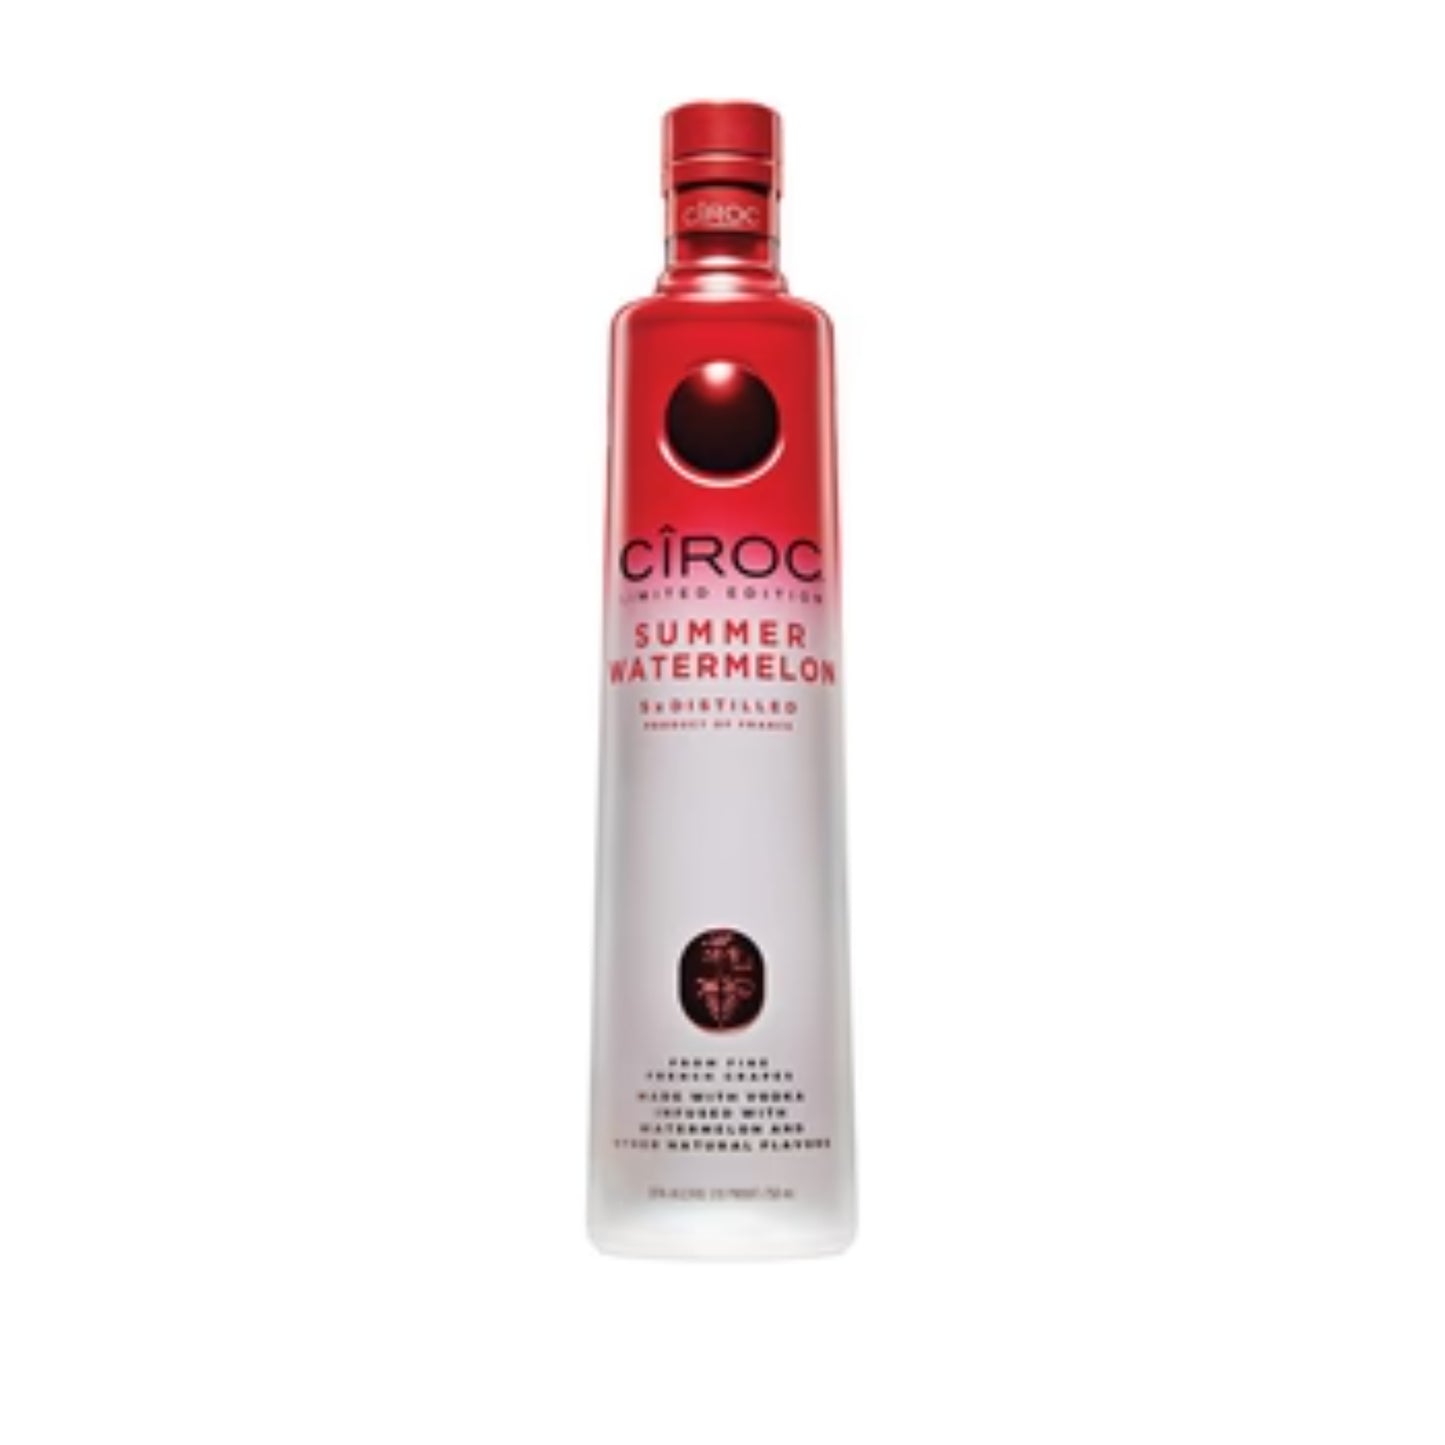 Ciroc Summer Watermelon Limited Edition - Liquor Geeks